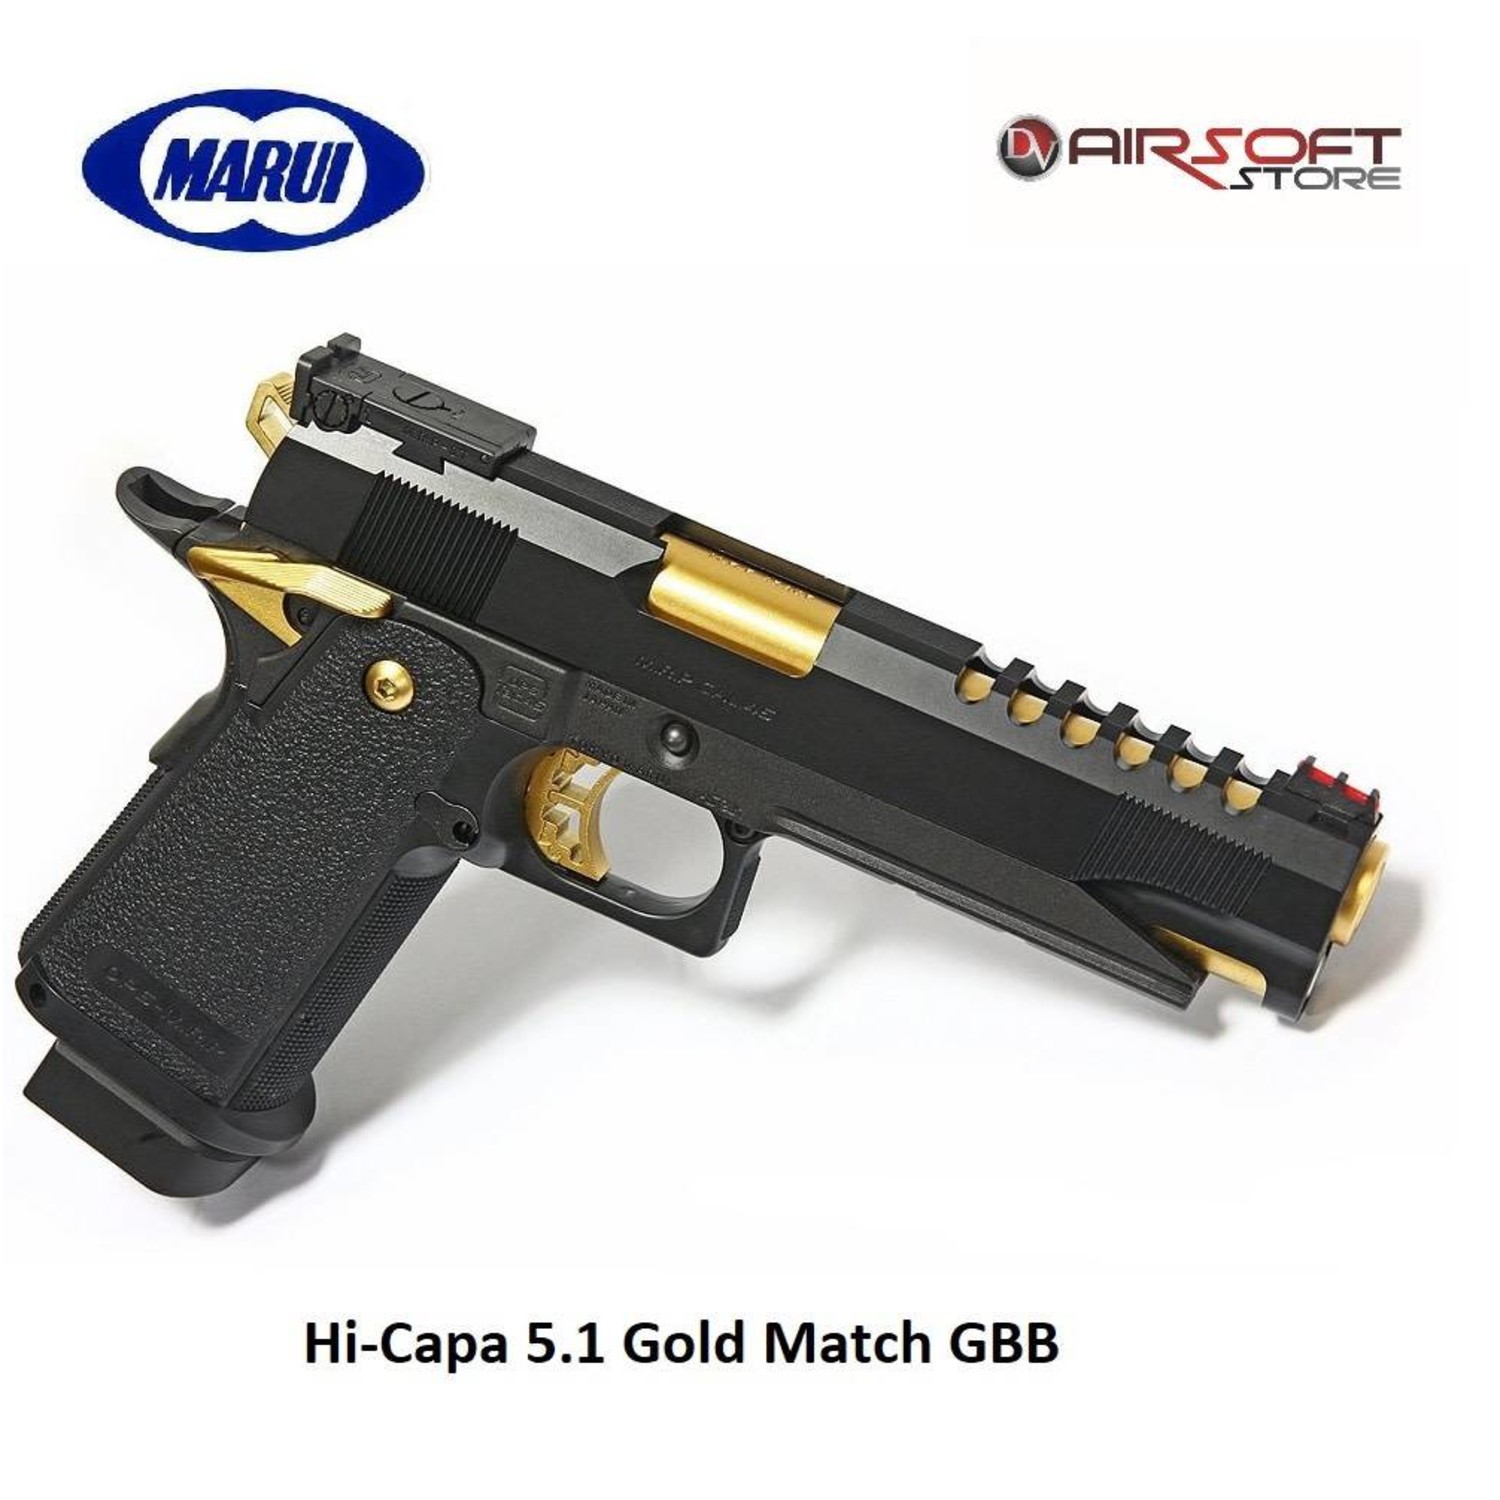 Hi-Capa 5.1 Gold Match GBB - Airsoft Store